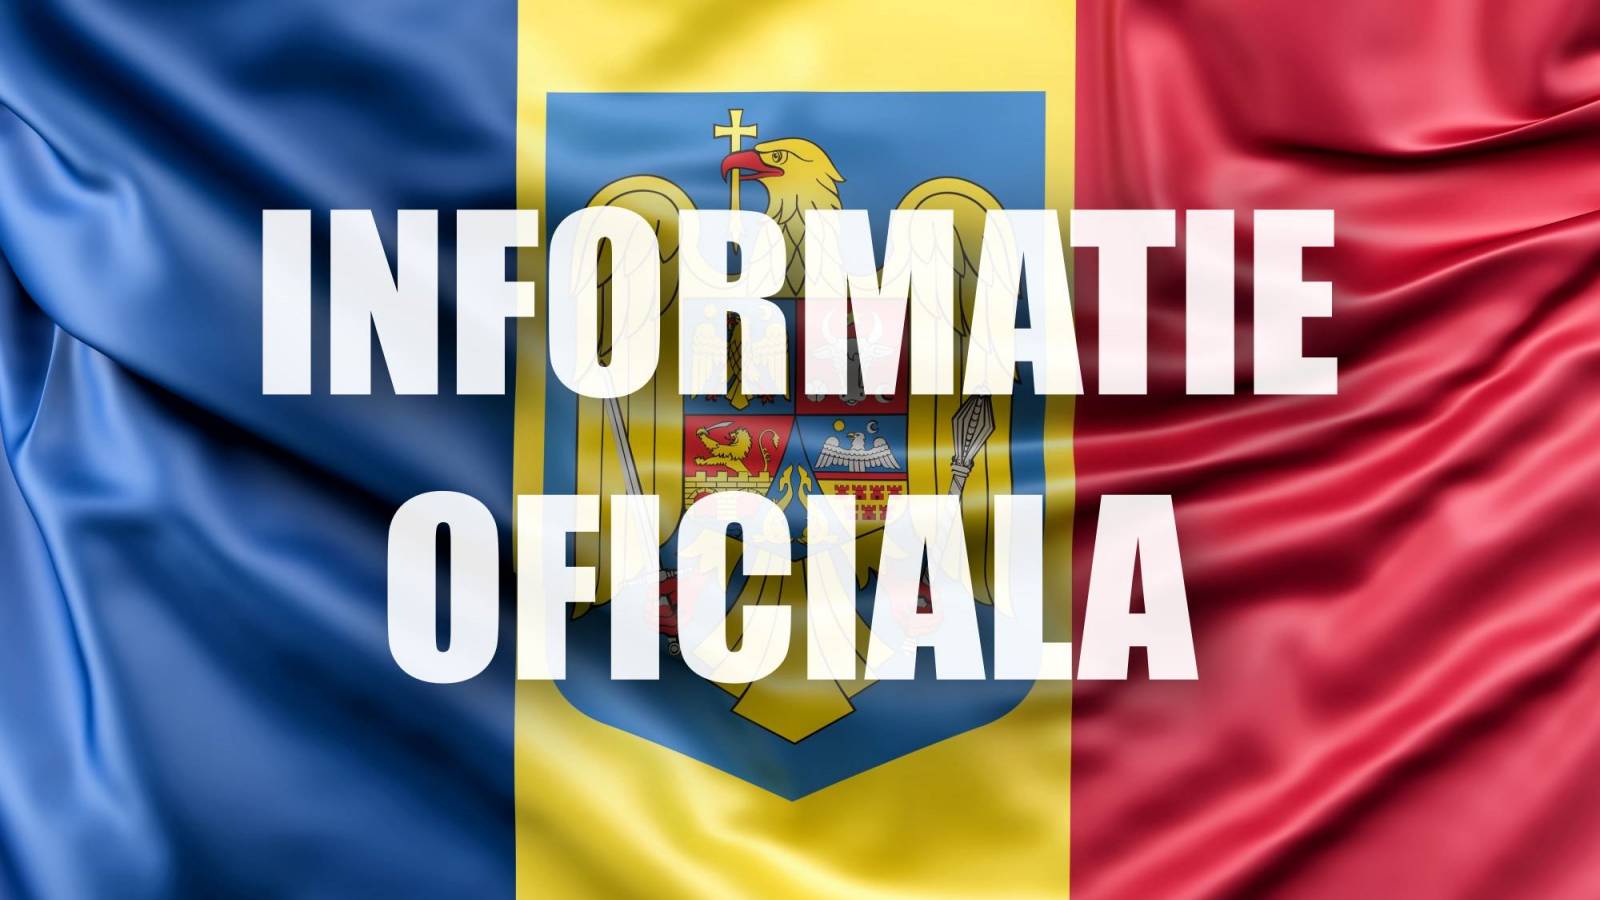 Ministerul Apararii Activitatile Oficiale ULTIM MOMENT Desfasurate Militarii Romani